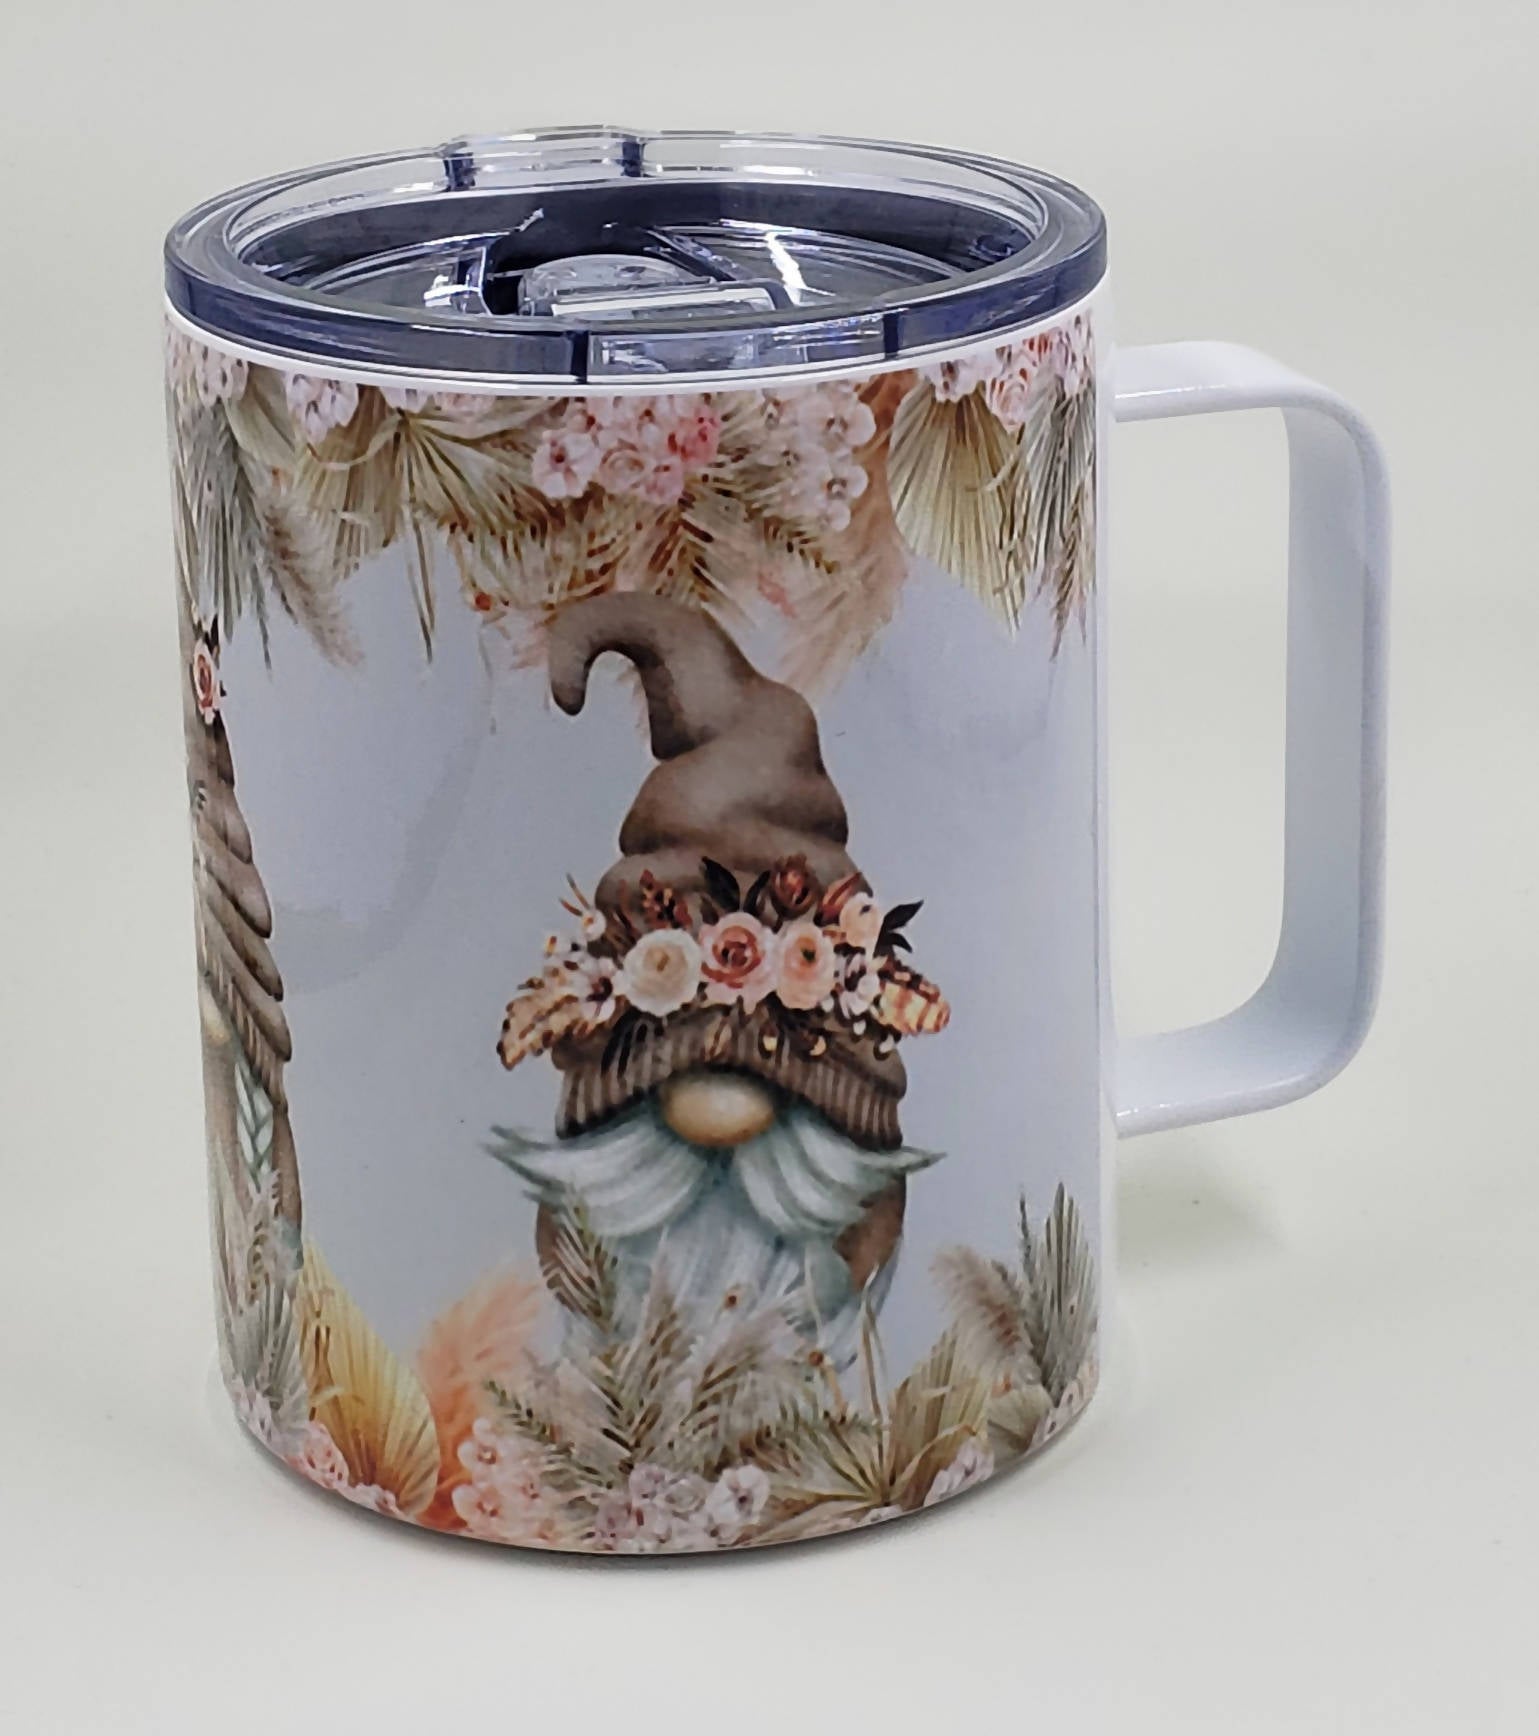 12oz. Stainless Coffee Mug with Lid - Bohemian Gnomes